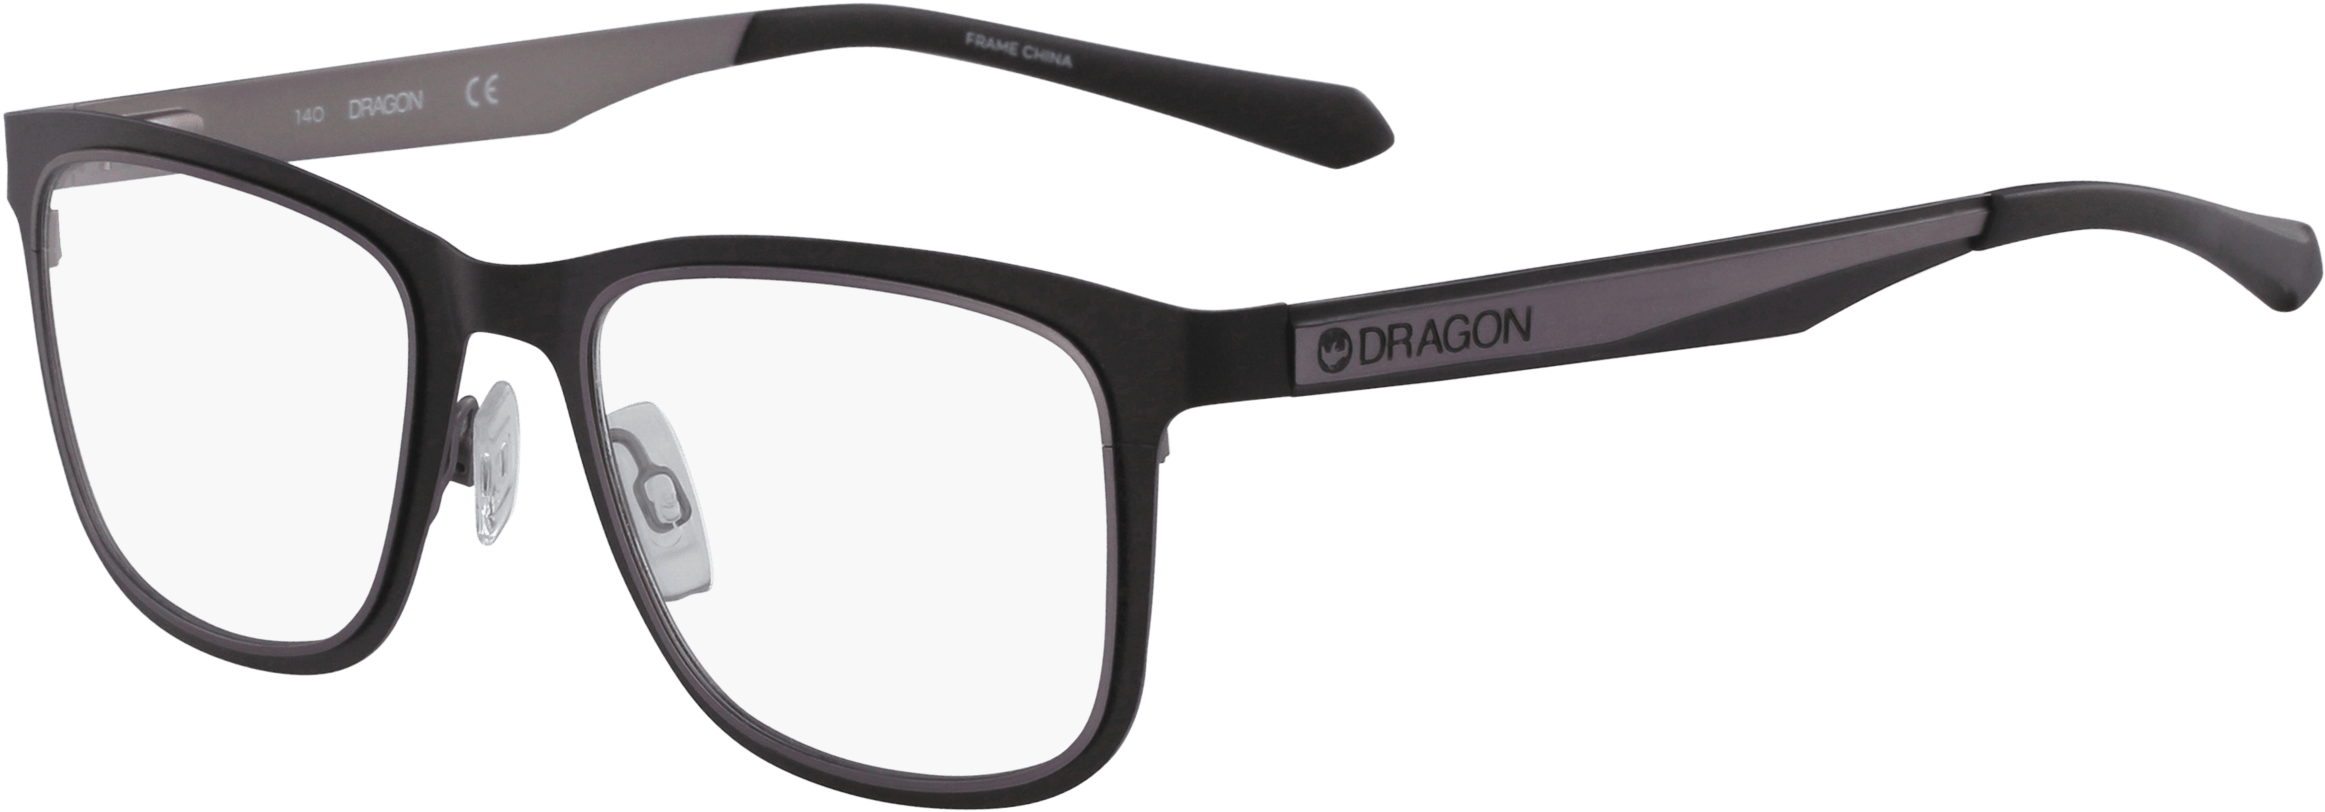 Black Frame Dragon Eyeglasses